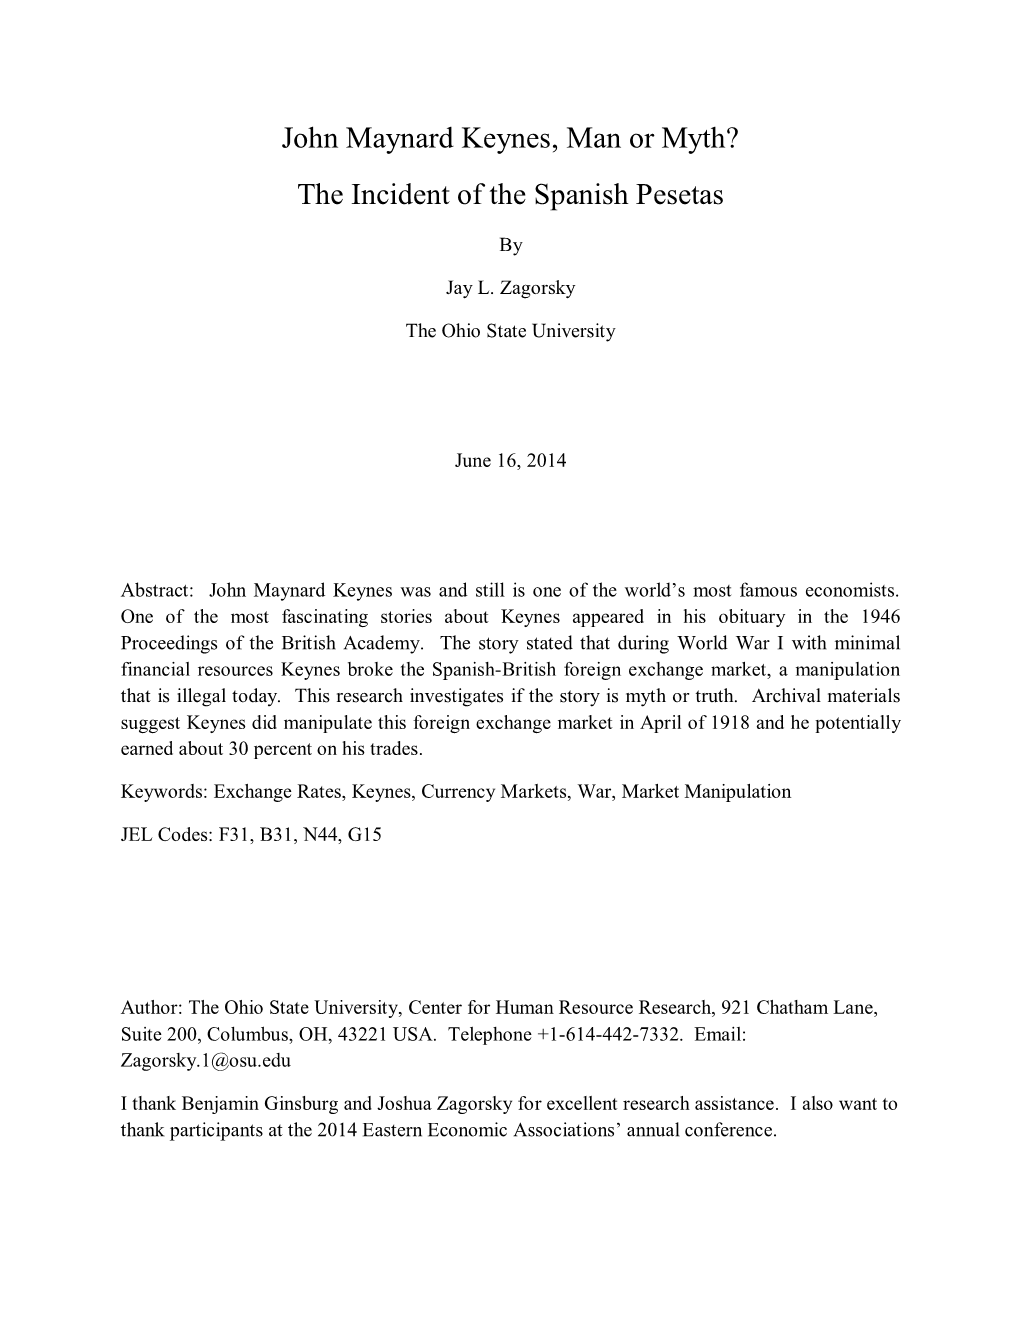 John Maynard Keynes, Man Or Myth? the Incident of the Spanish Pesetas